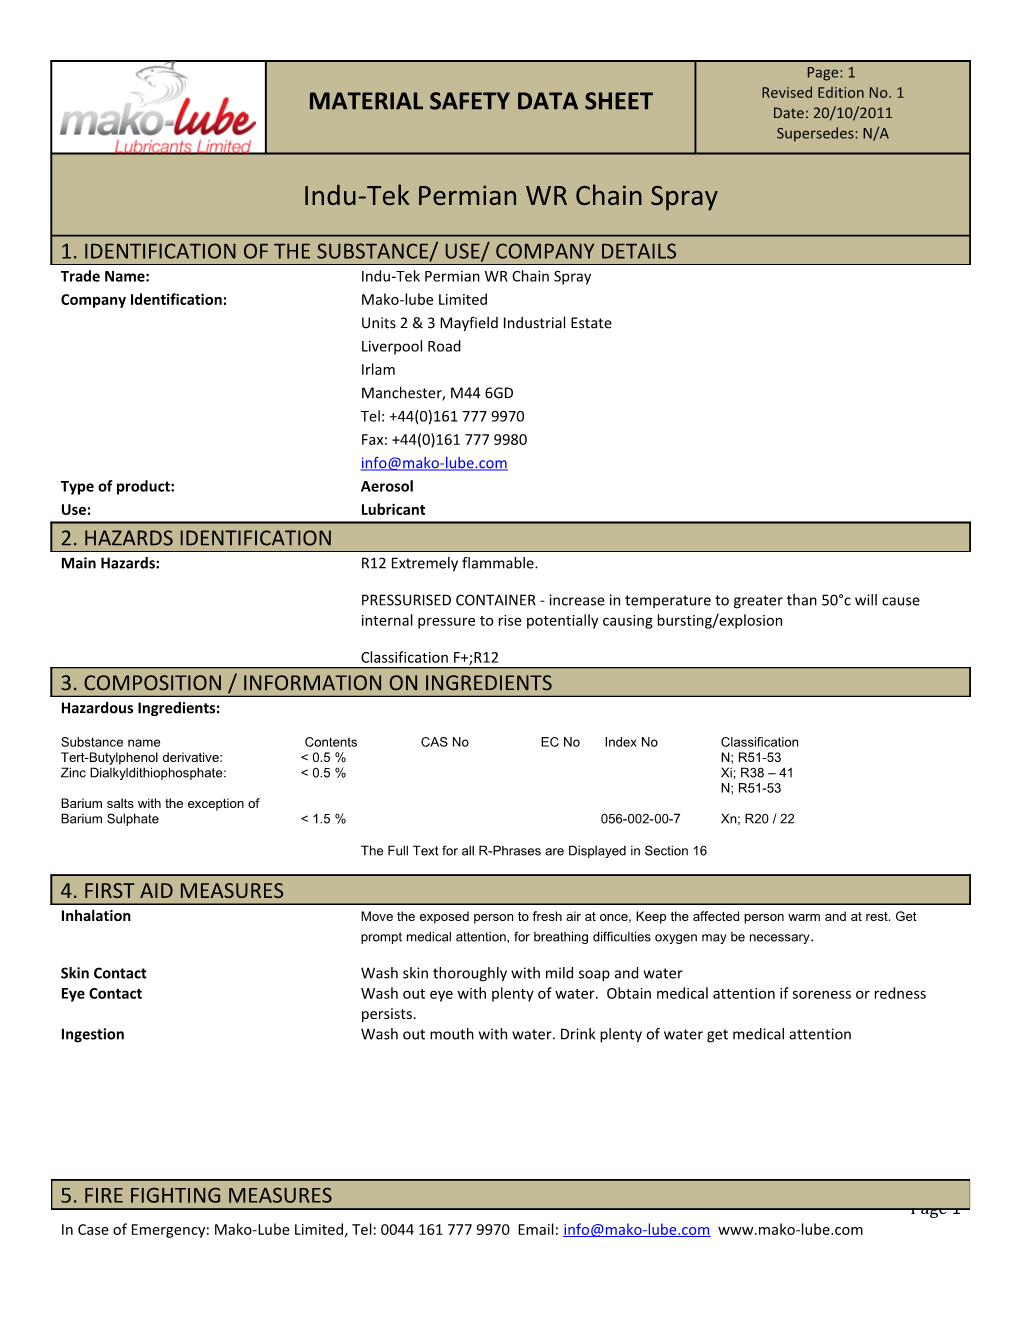 Trade Name:Indu-Tekpermian WR Chainspray